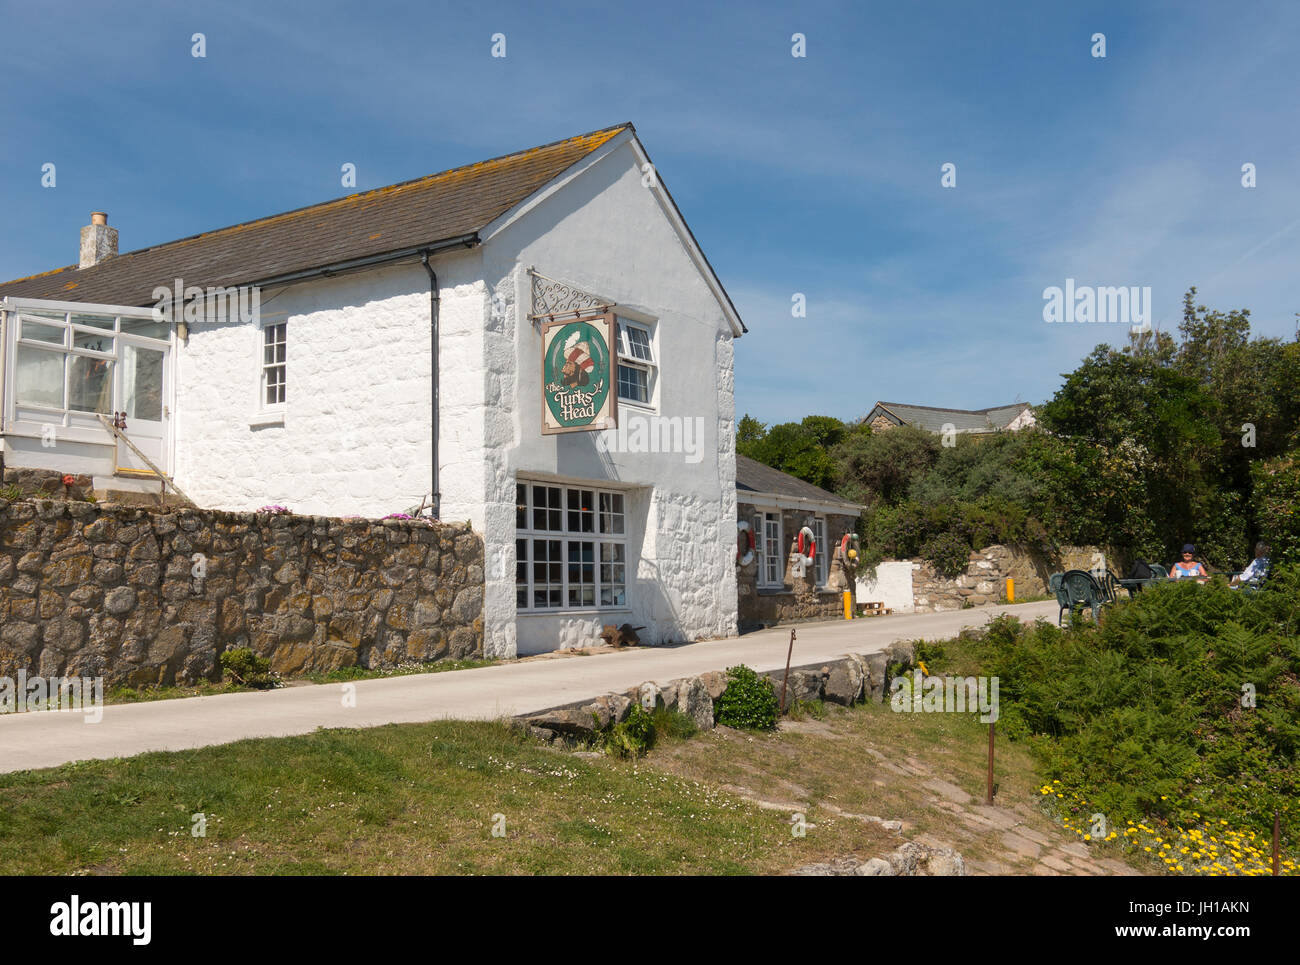 Die Turks Head Pub in St. Agnes, Isles of Scilly, Cornwall England UK.  Die einzige Publikation auf der Insel. Stockfoto